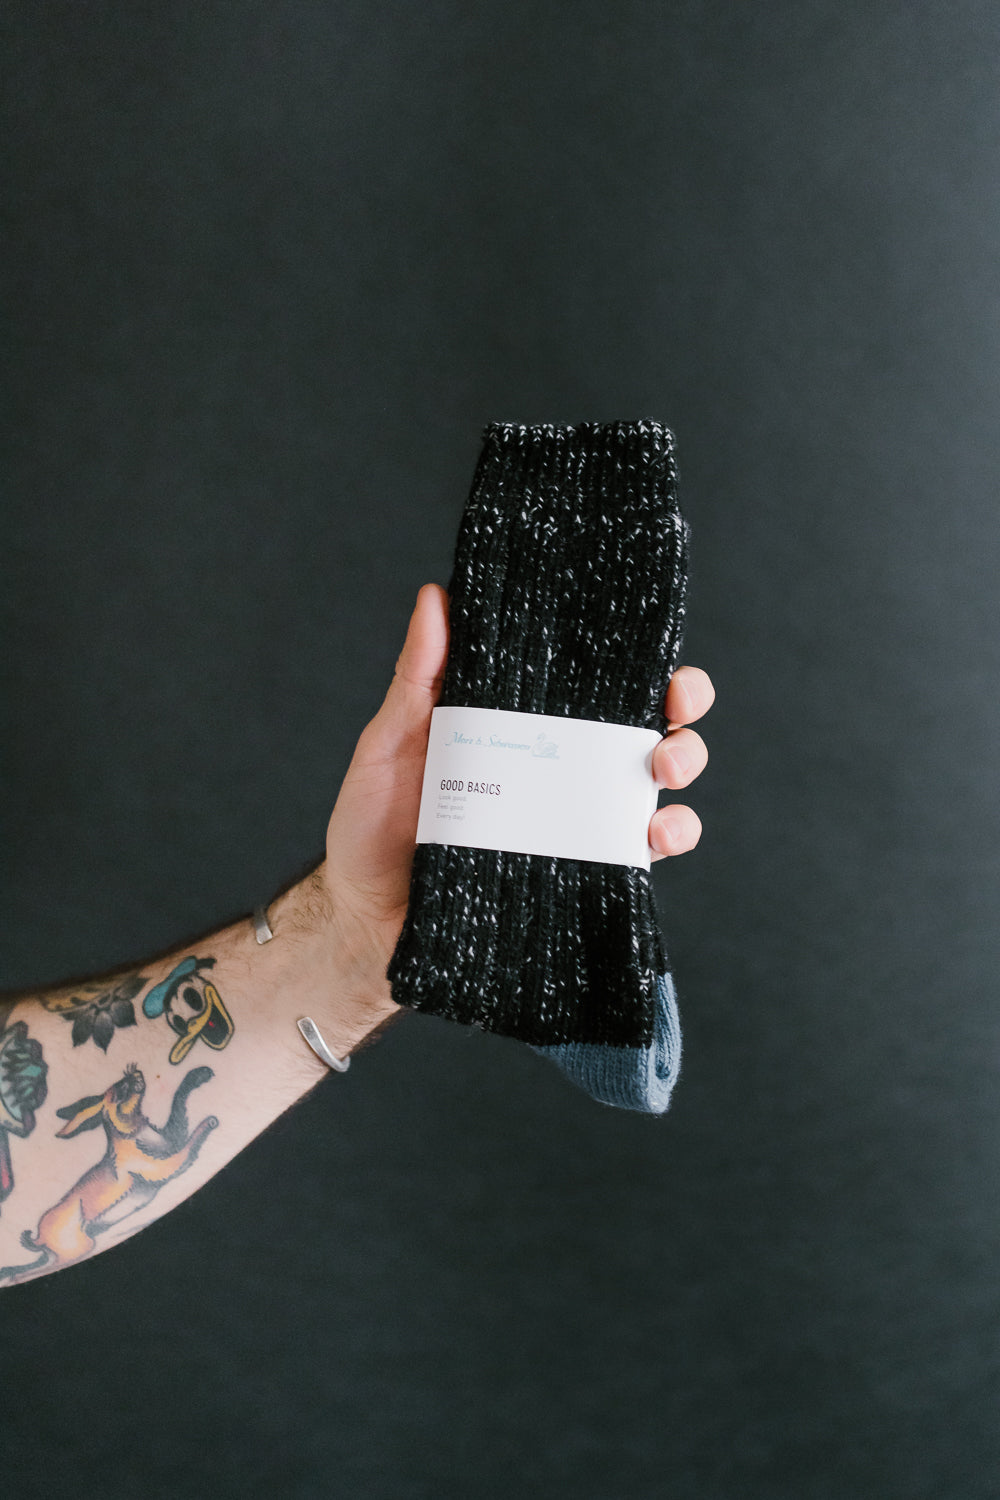 MW72.9902 - Extra Fine Merino Wool Socks - Deep Black, Nature